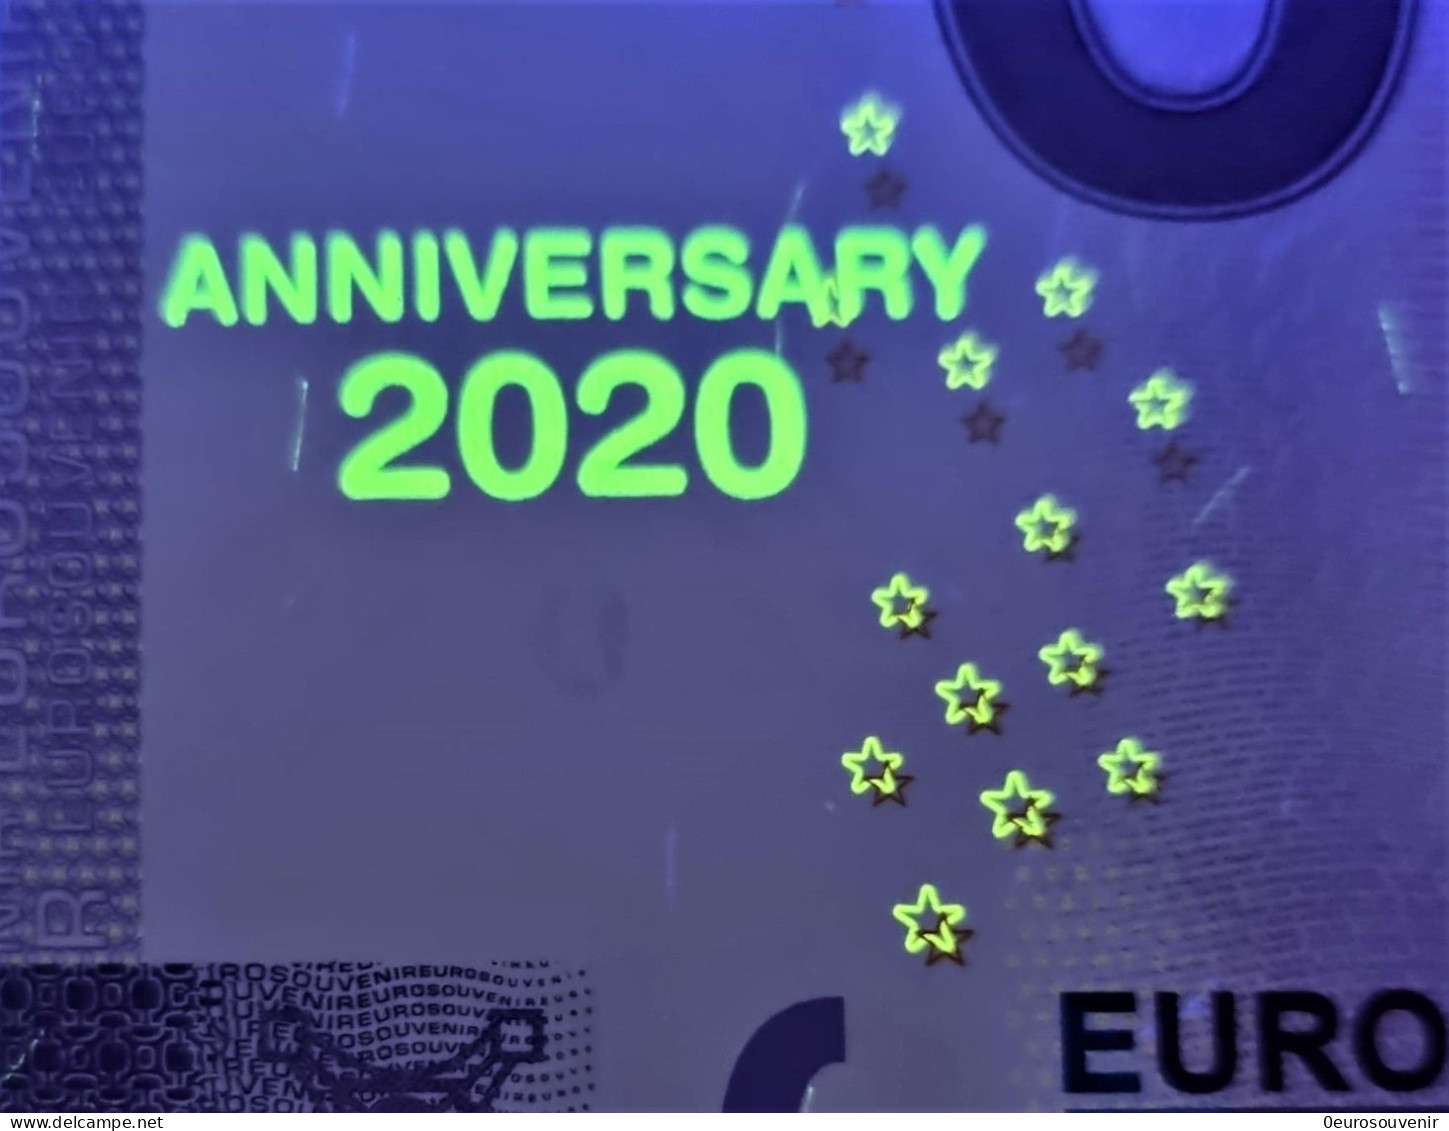 0-Euro XEAH 2021-4  ZOO LEIPZIG - PONGOLAND SET NORMAL+ANNIVERSARY - Pruebas Privadas